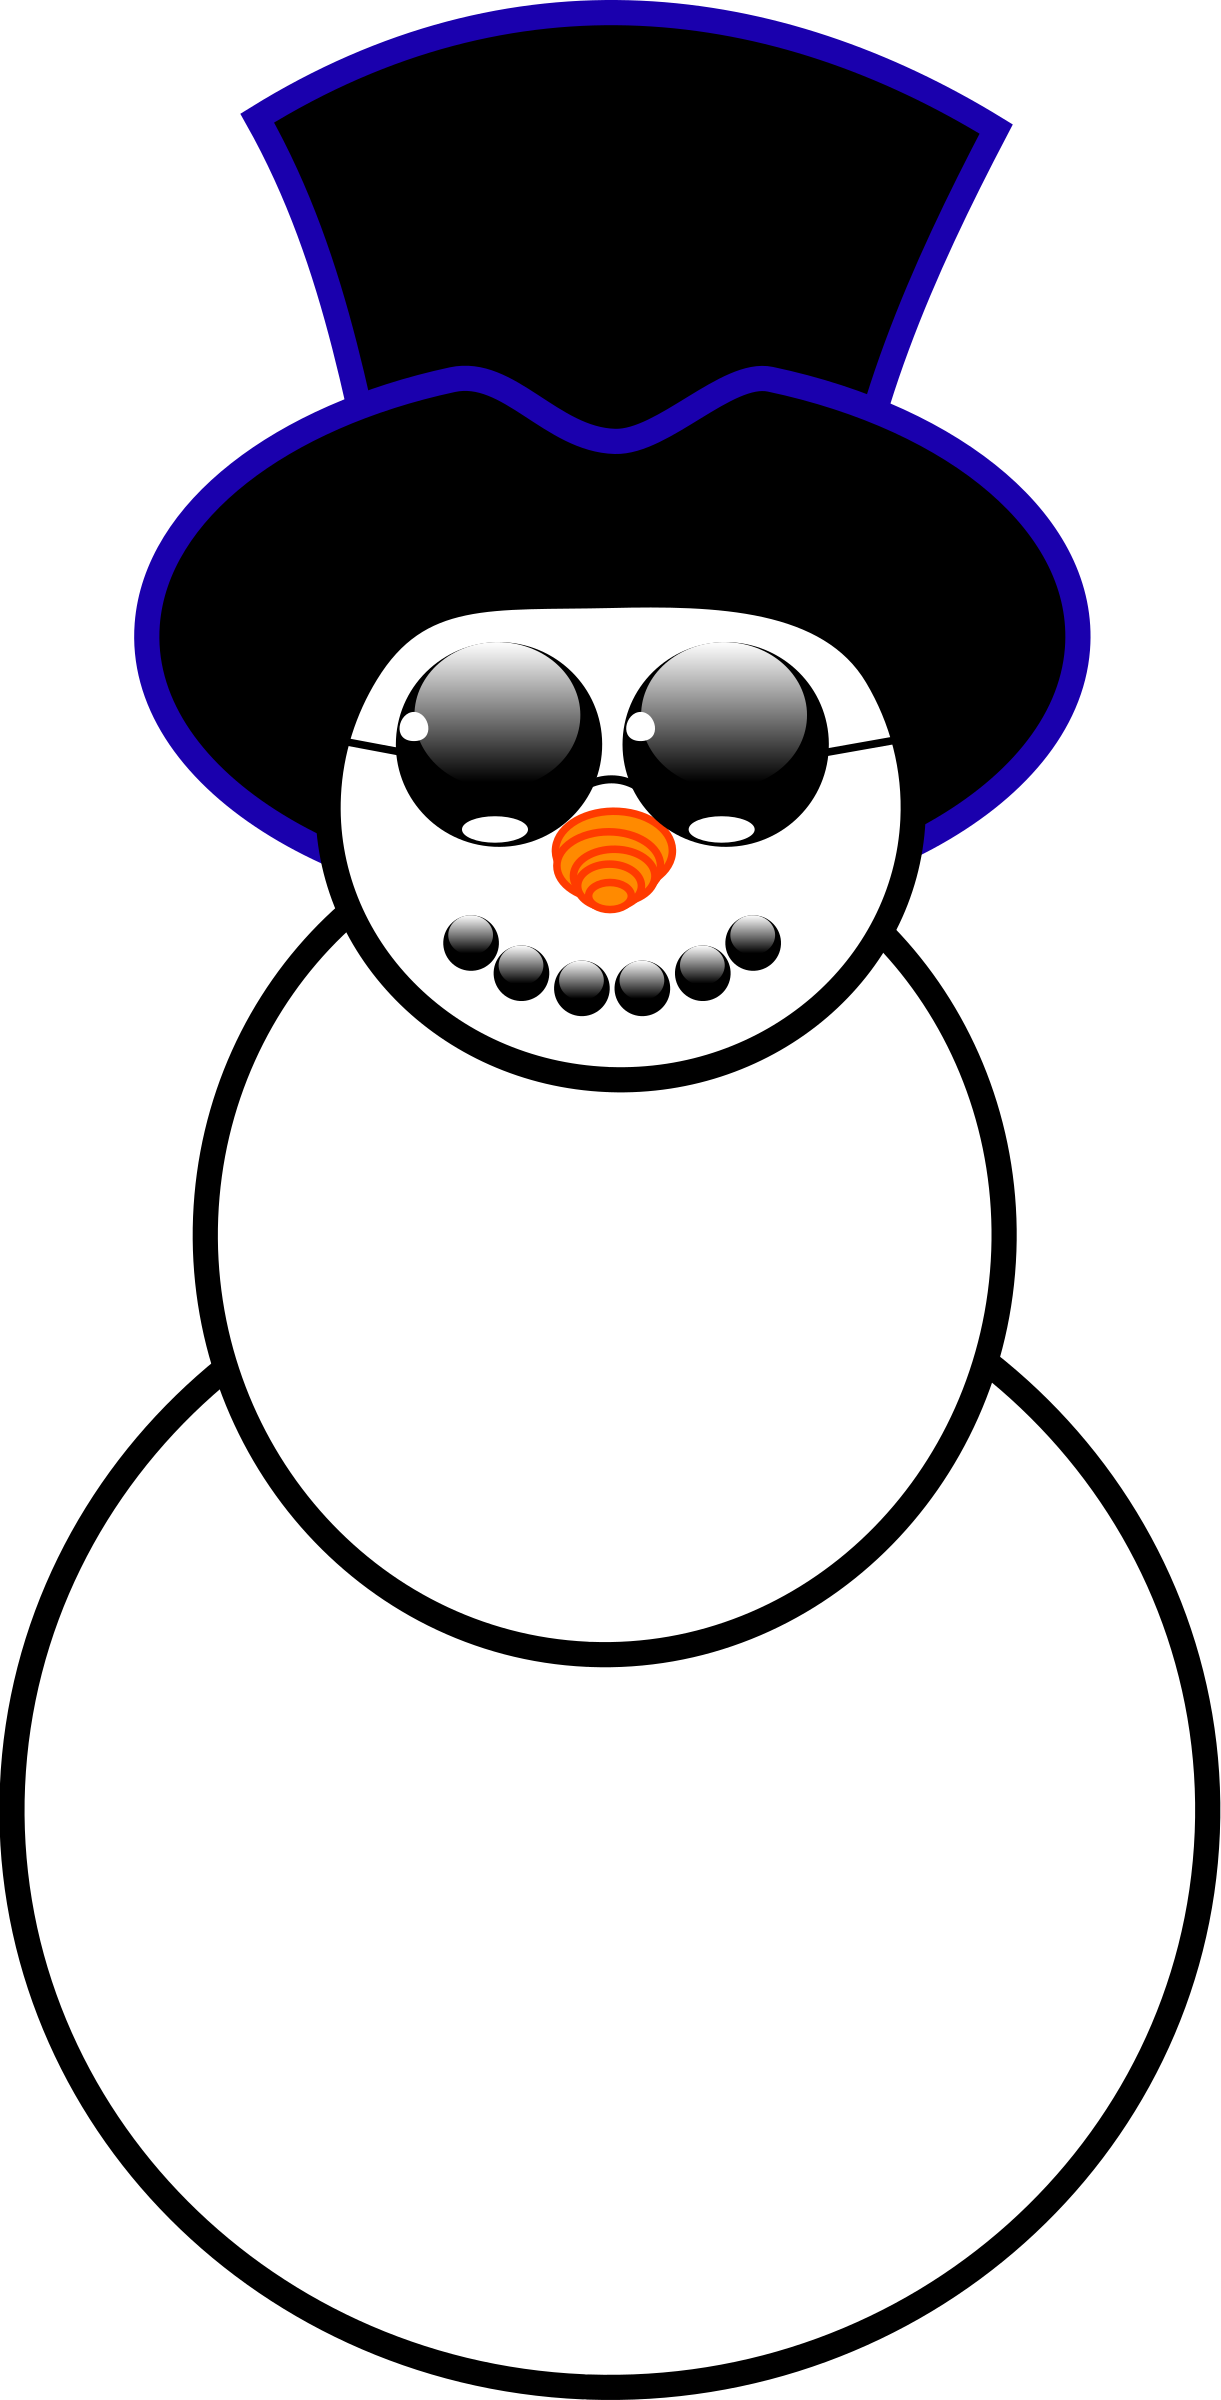 Snowman Vector Art image - Free stock photo - Public ...